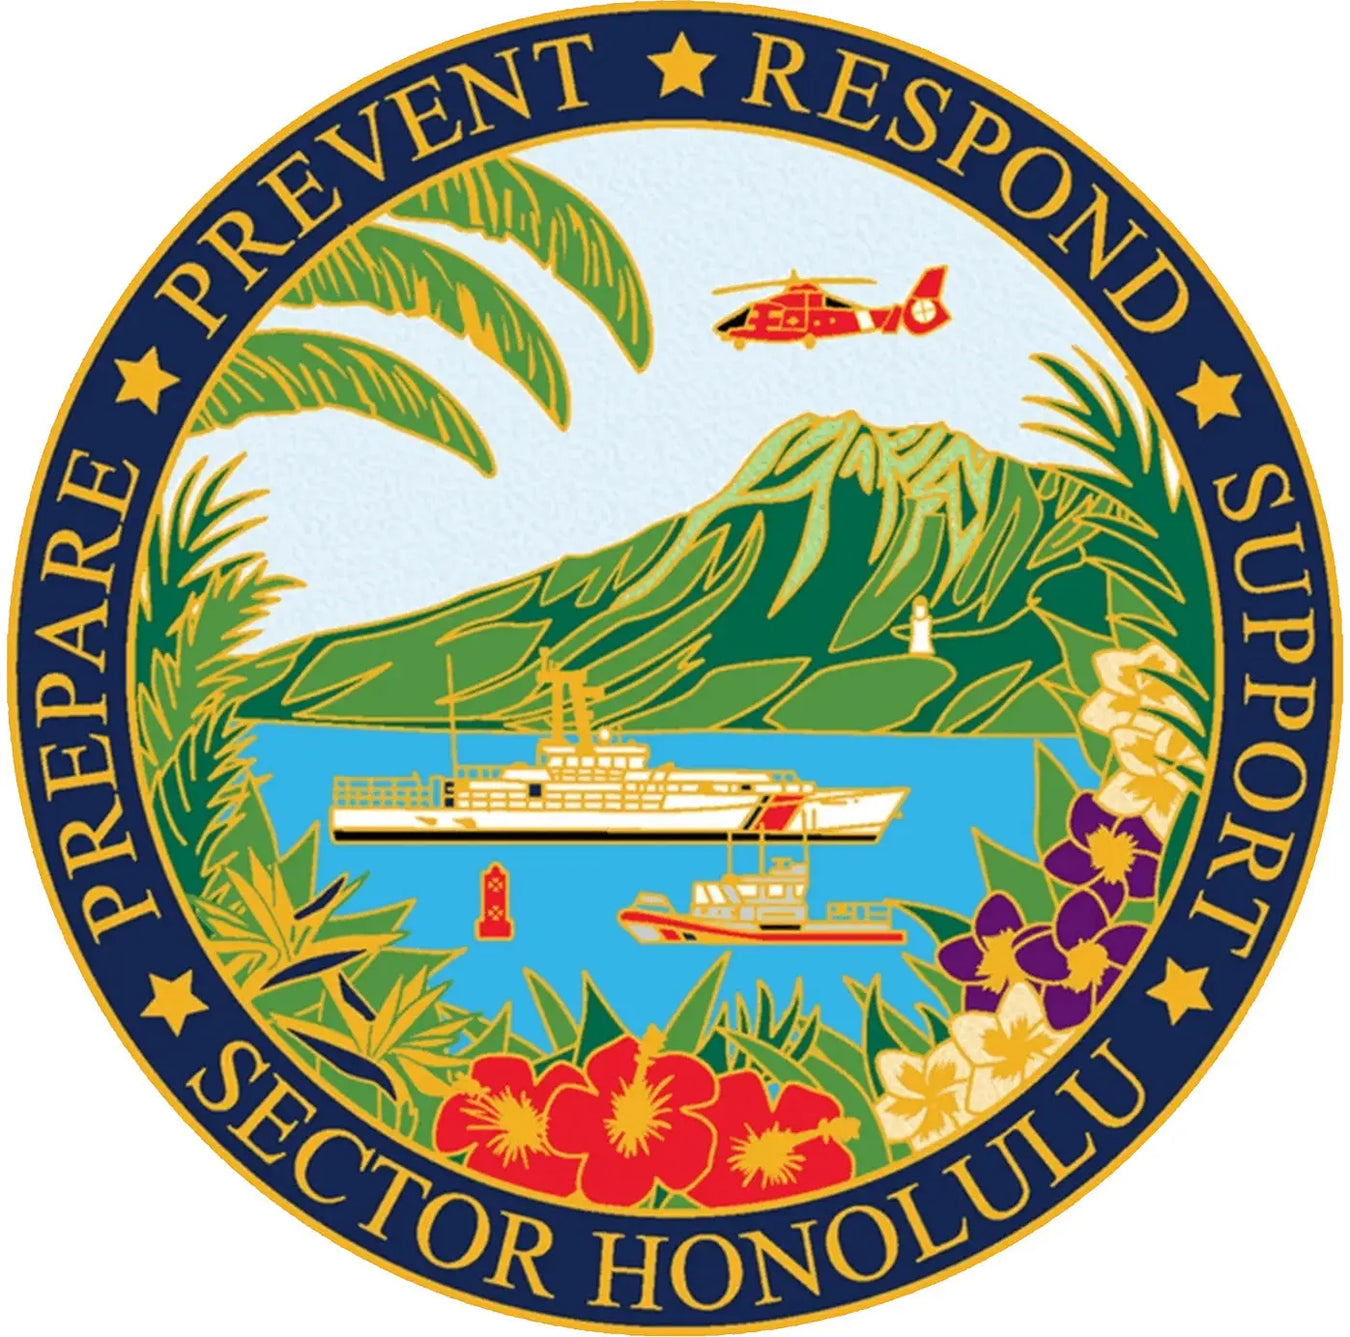 Sector Honolulu